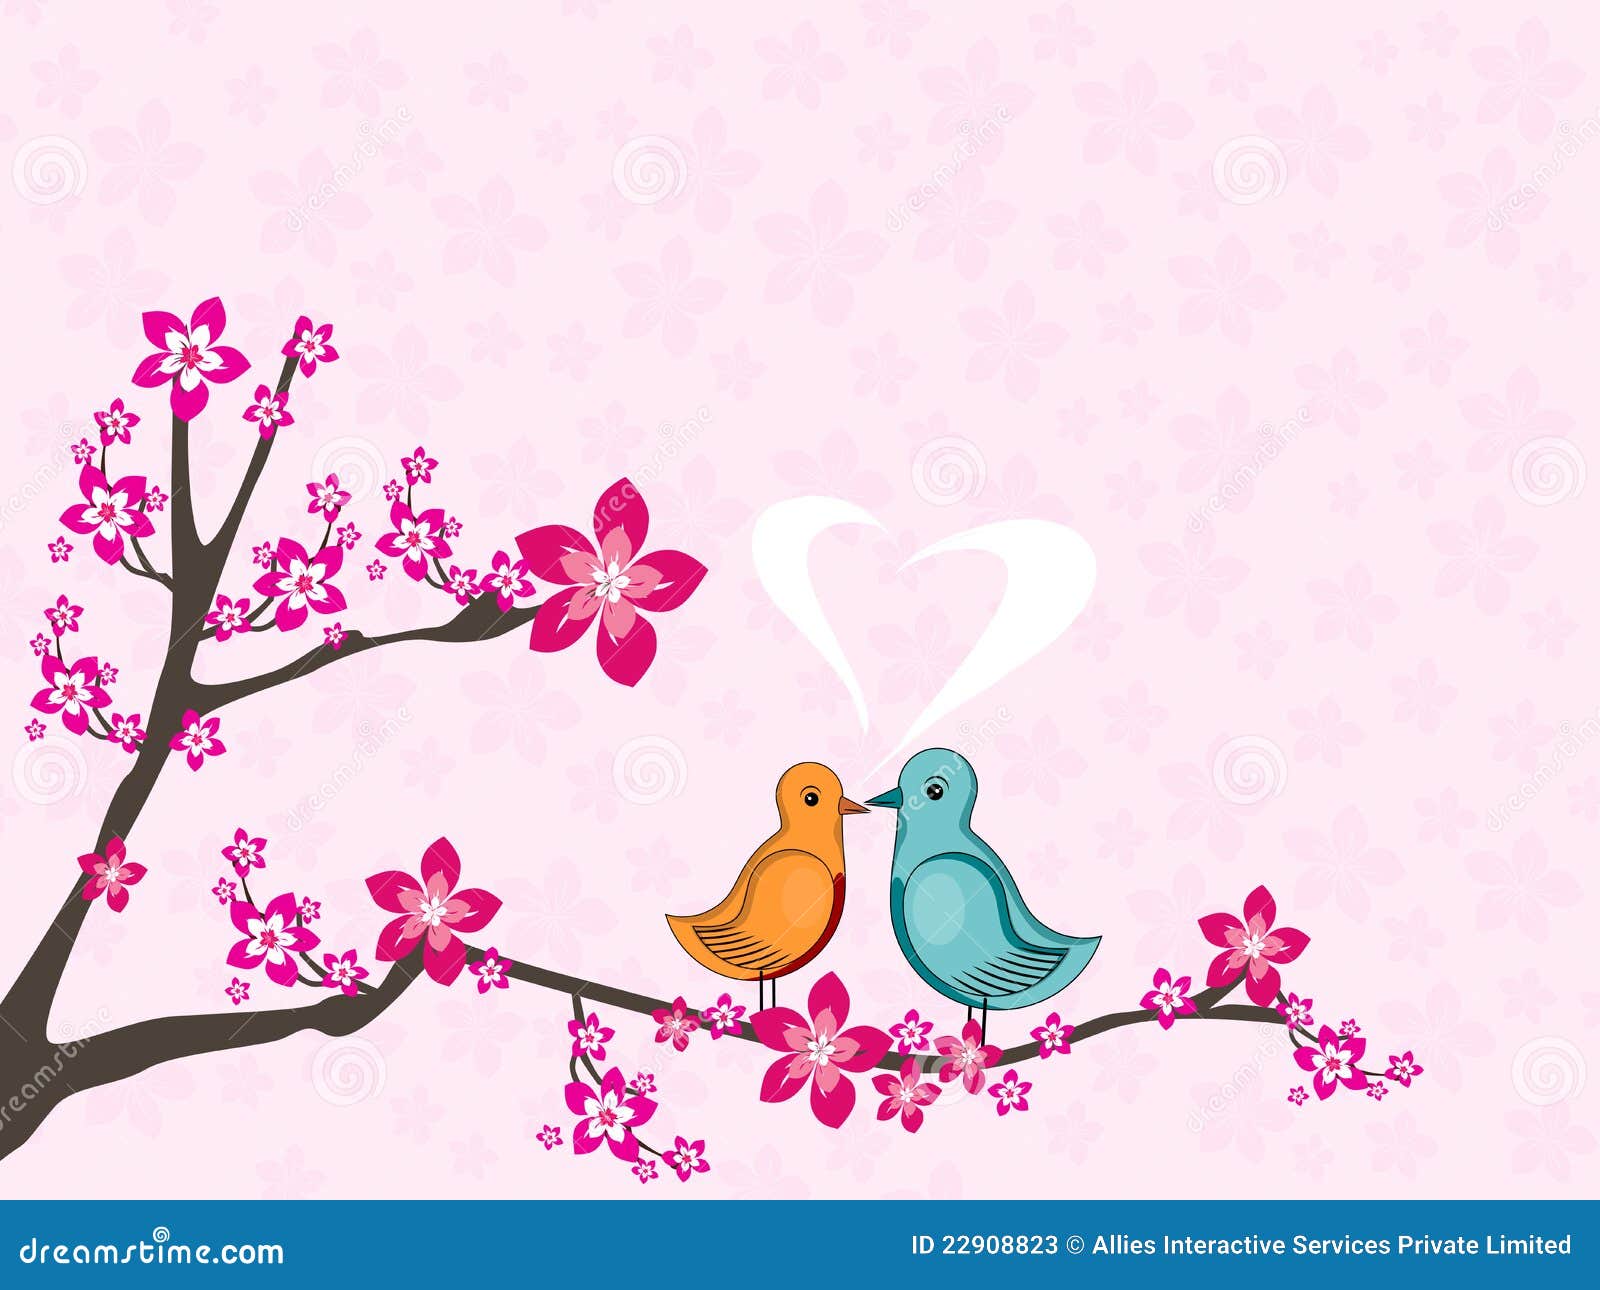 Love Birds Sitting On Tree Branch Stock Photos - Image: 229088231300 x 1065